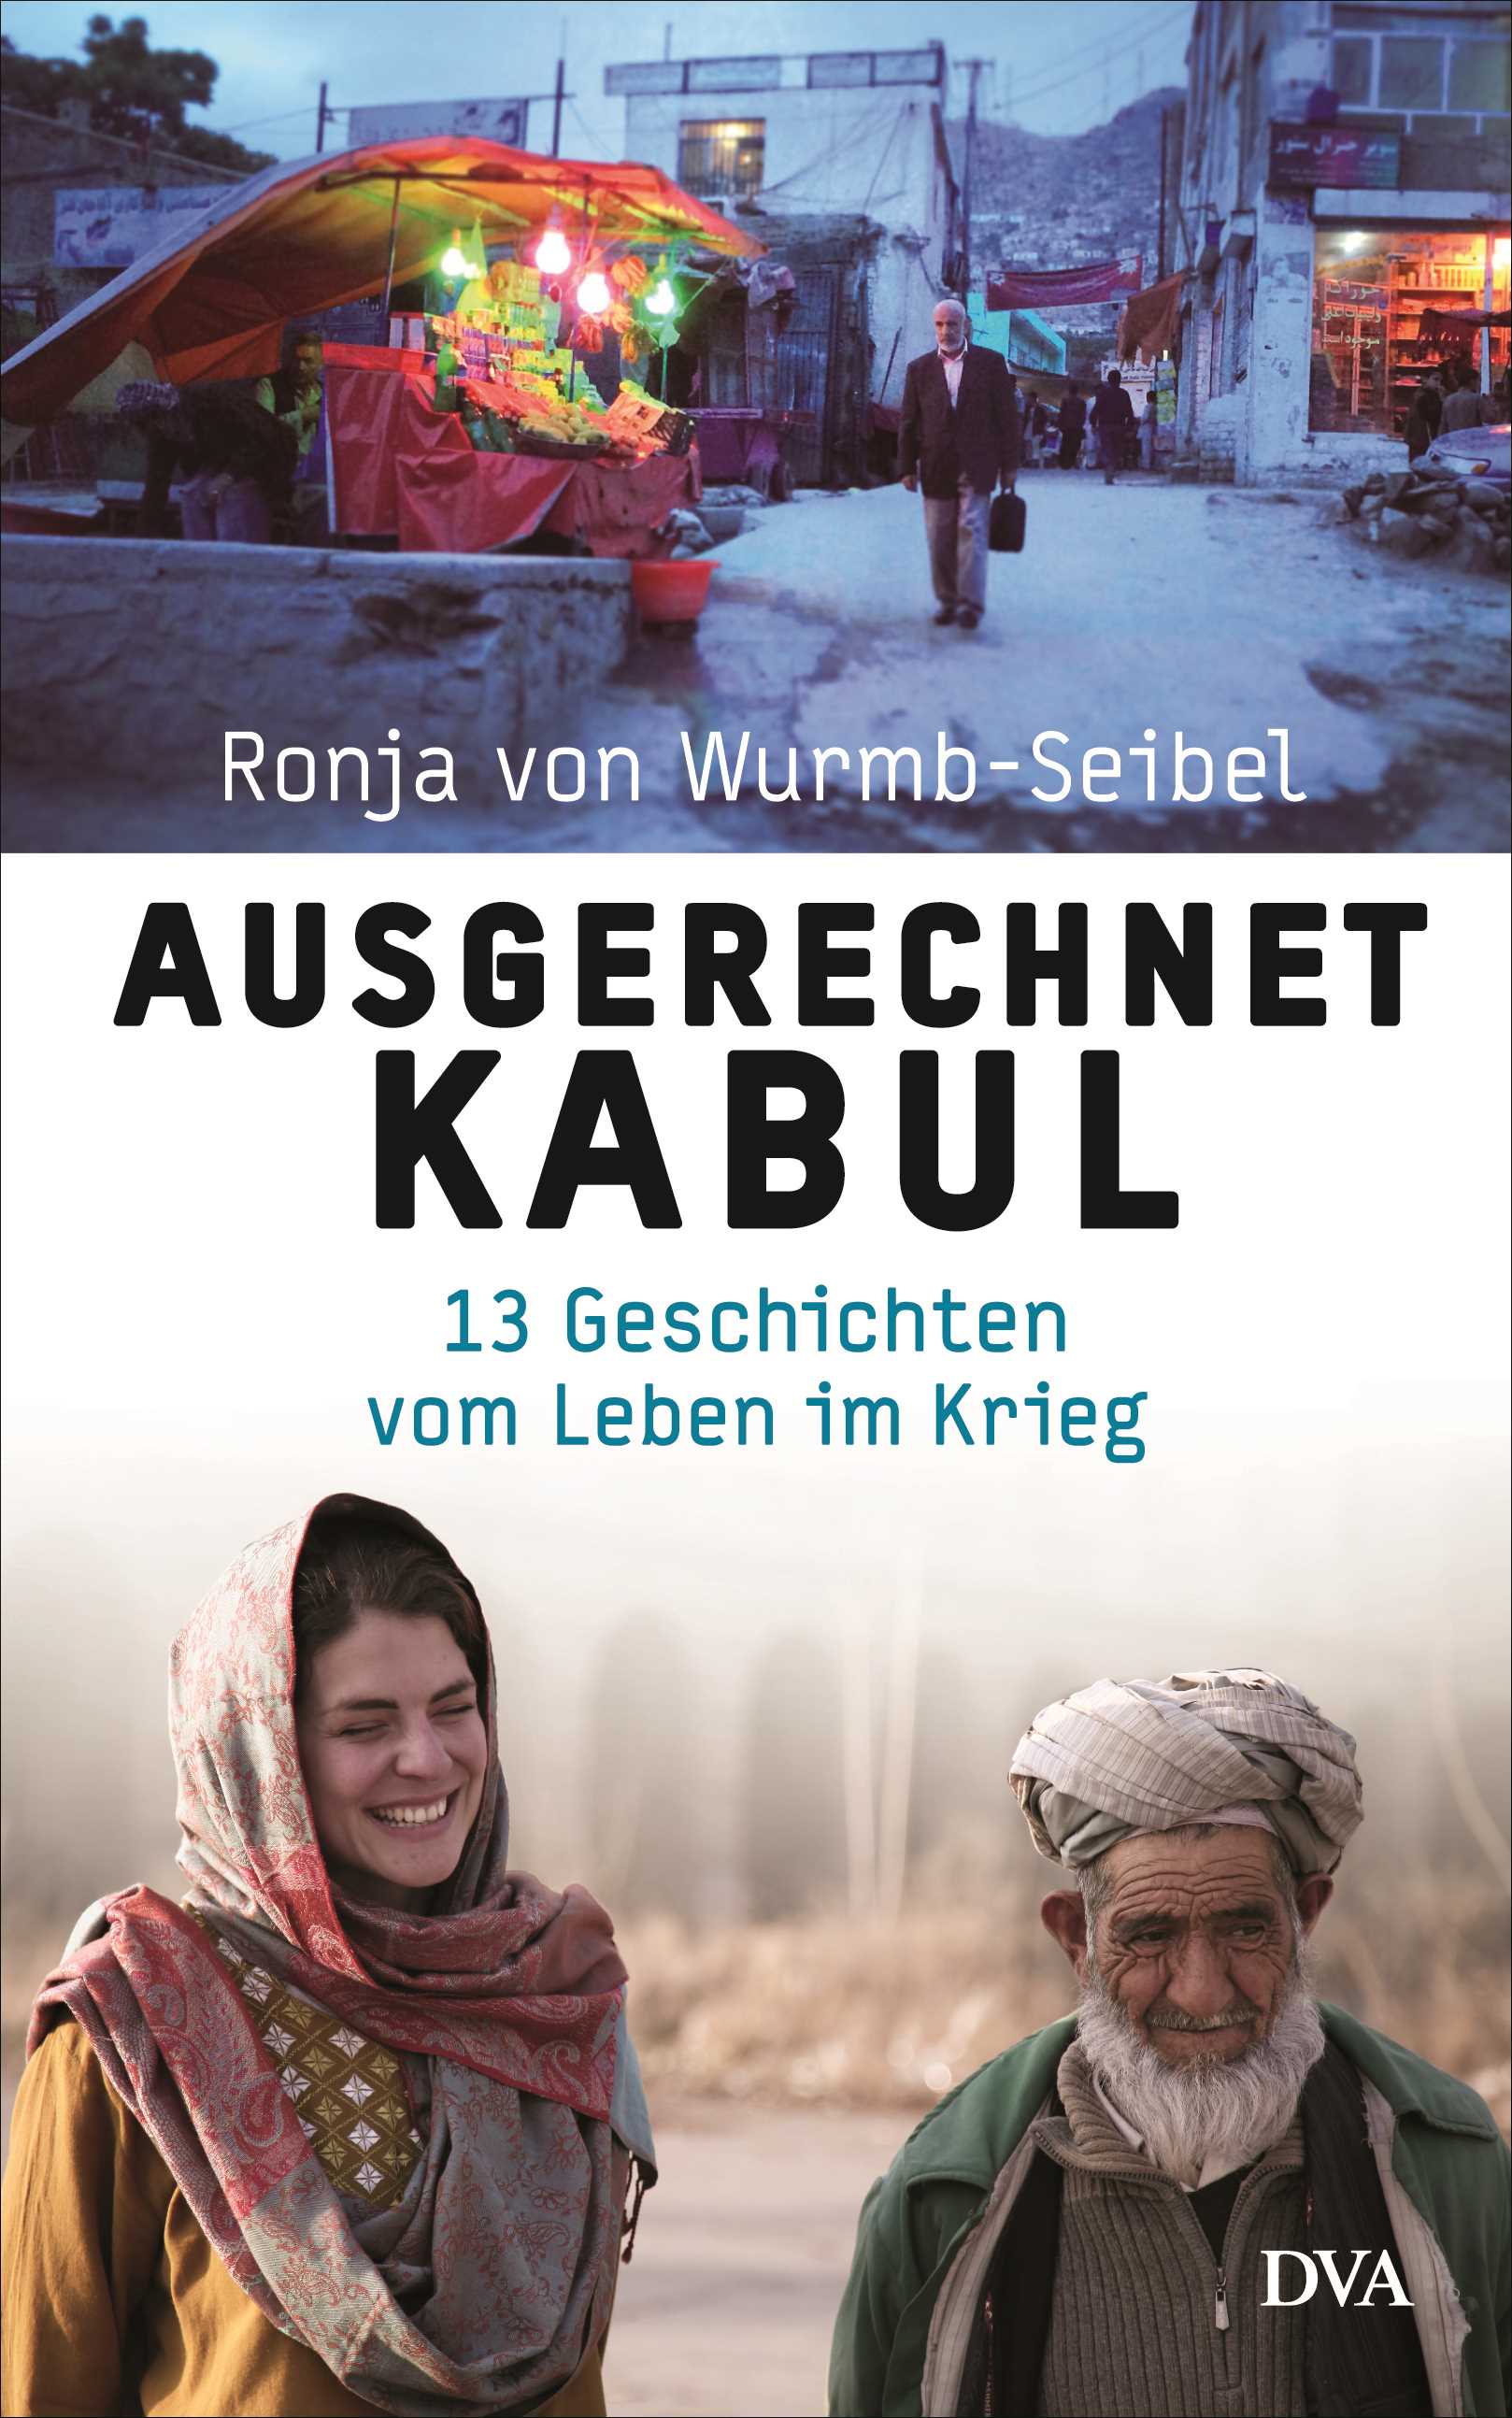 Cover of Ronja von Wurmb-Seibel's book Ausgerechnet Kabul (source: DVA)